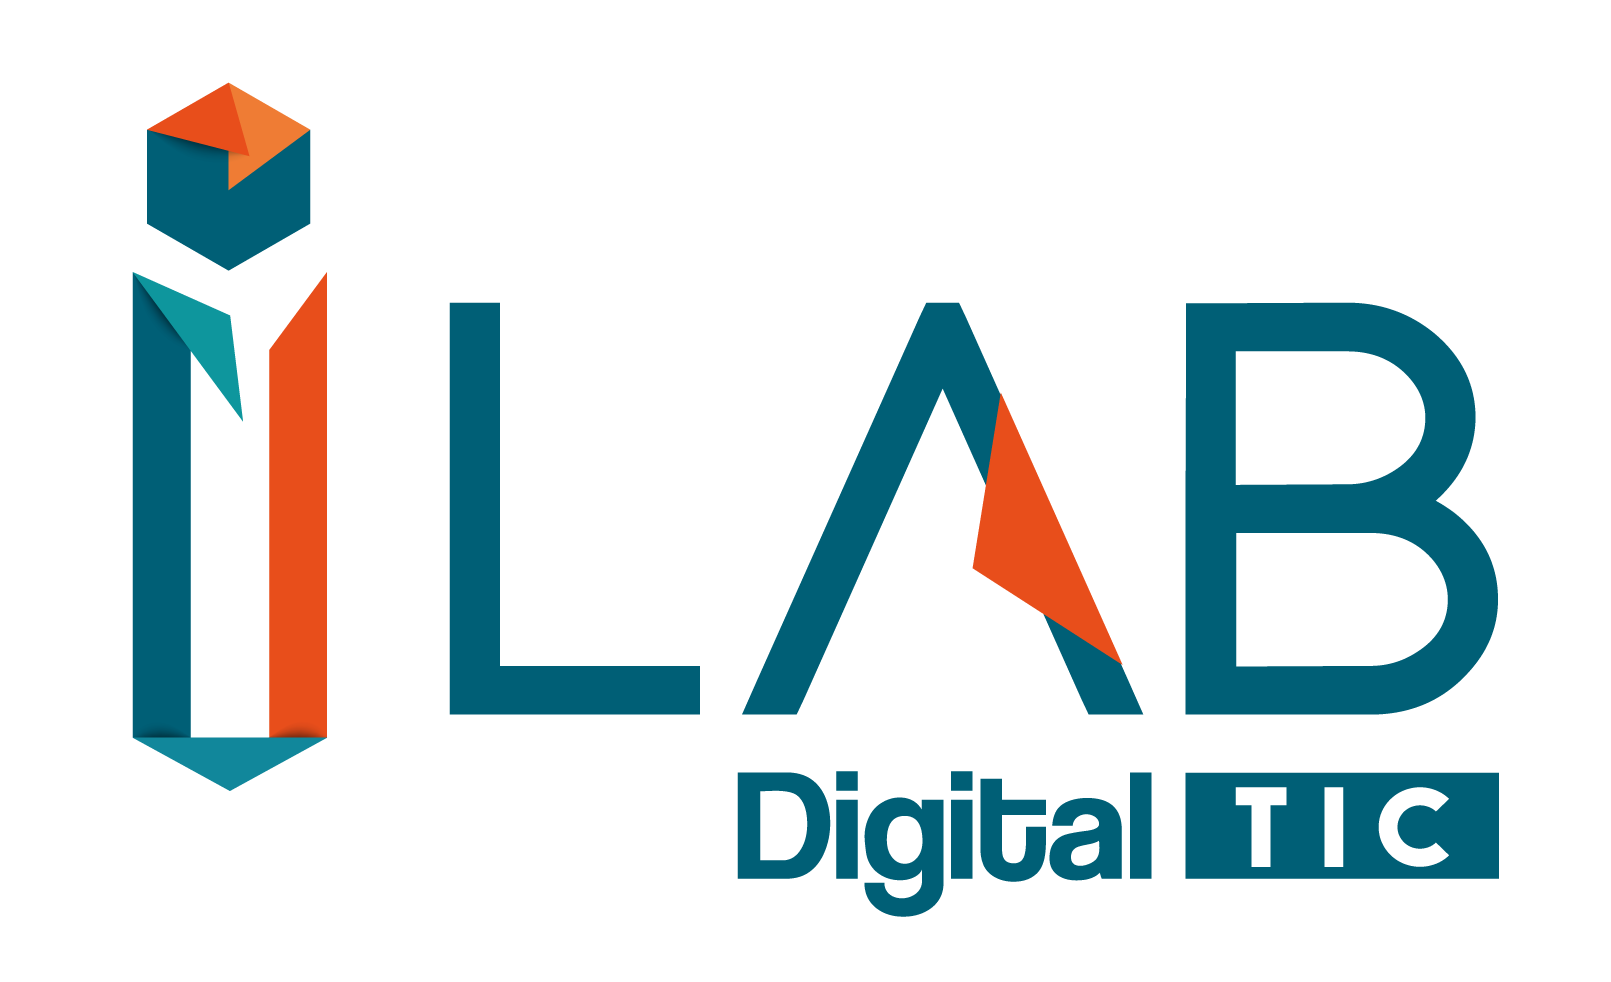 iLAB Digital TIC